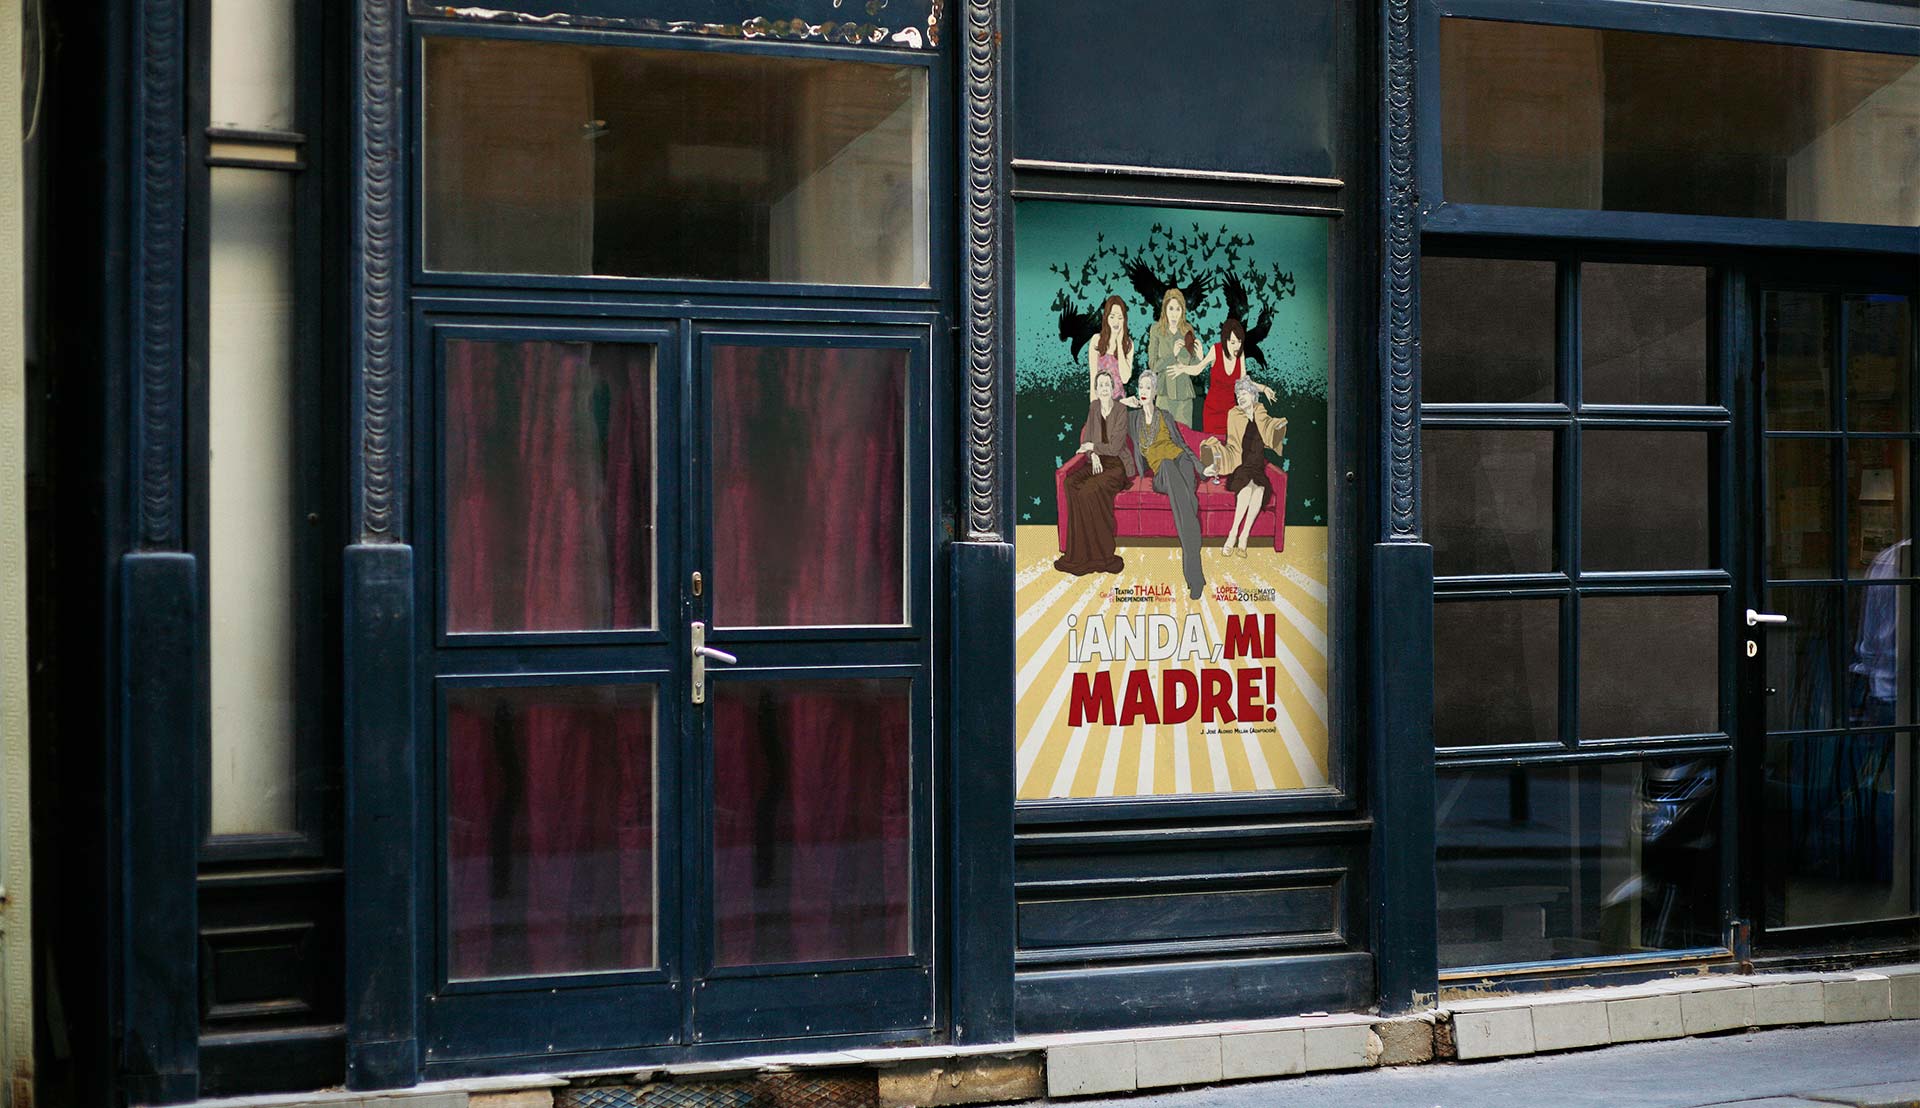 Cartel promocional para la publicidad de la obra teatral, "Anda, mi madre"